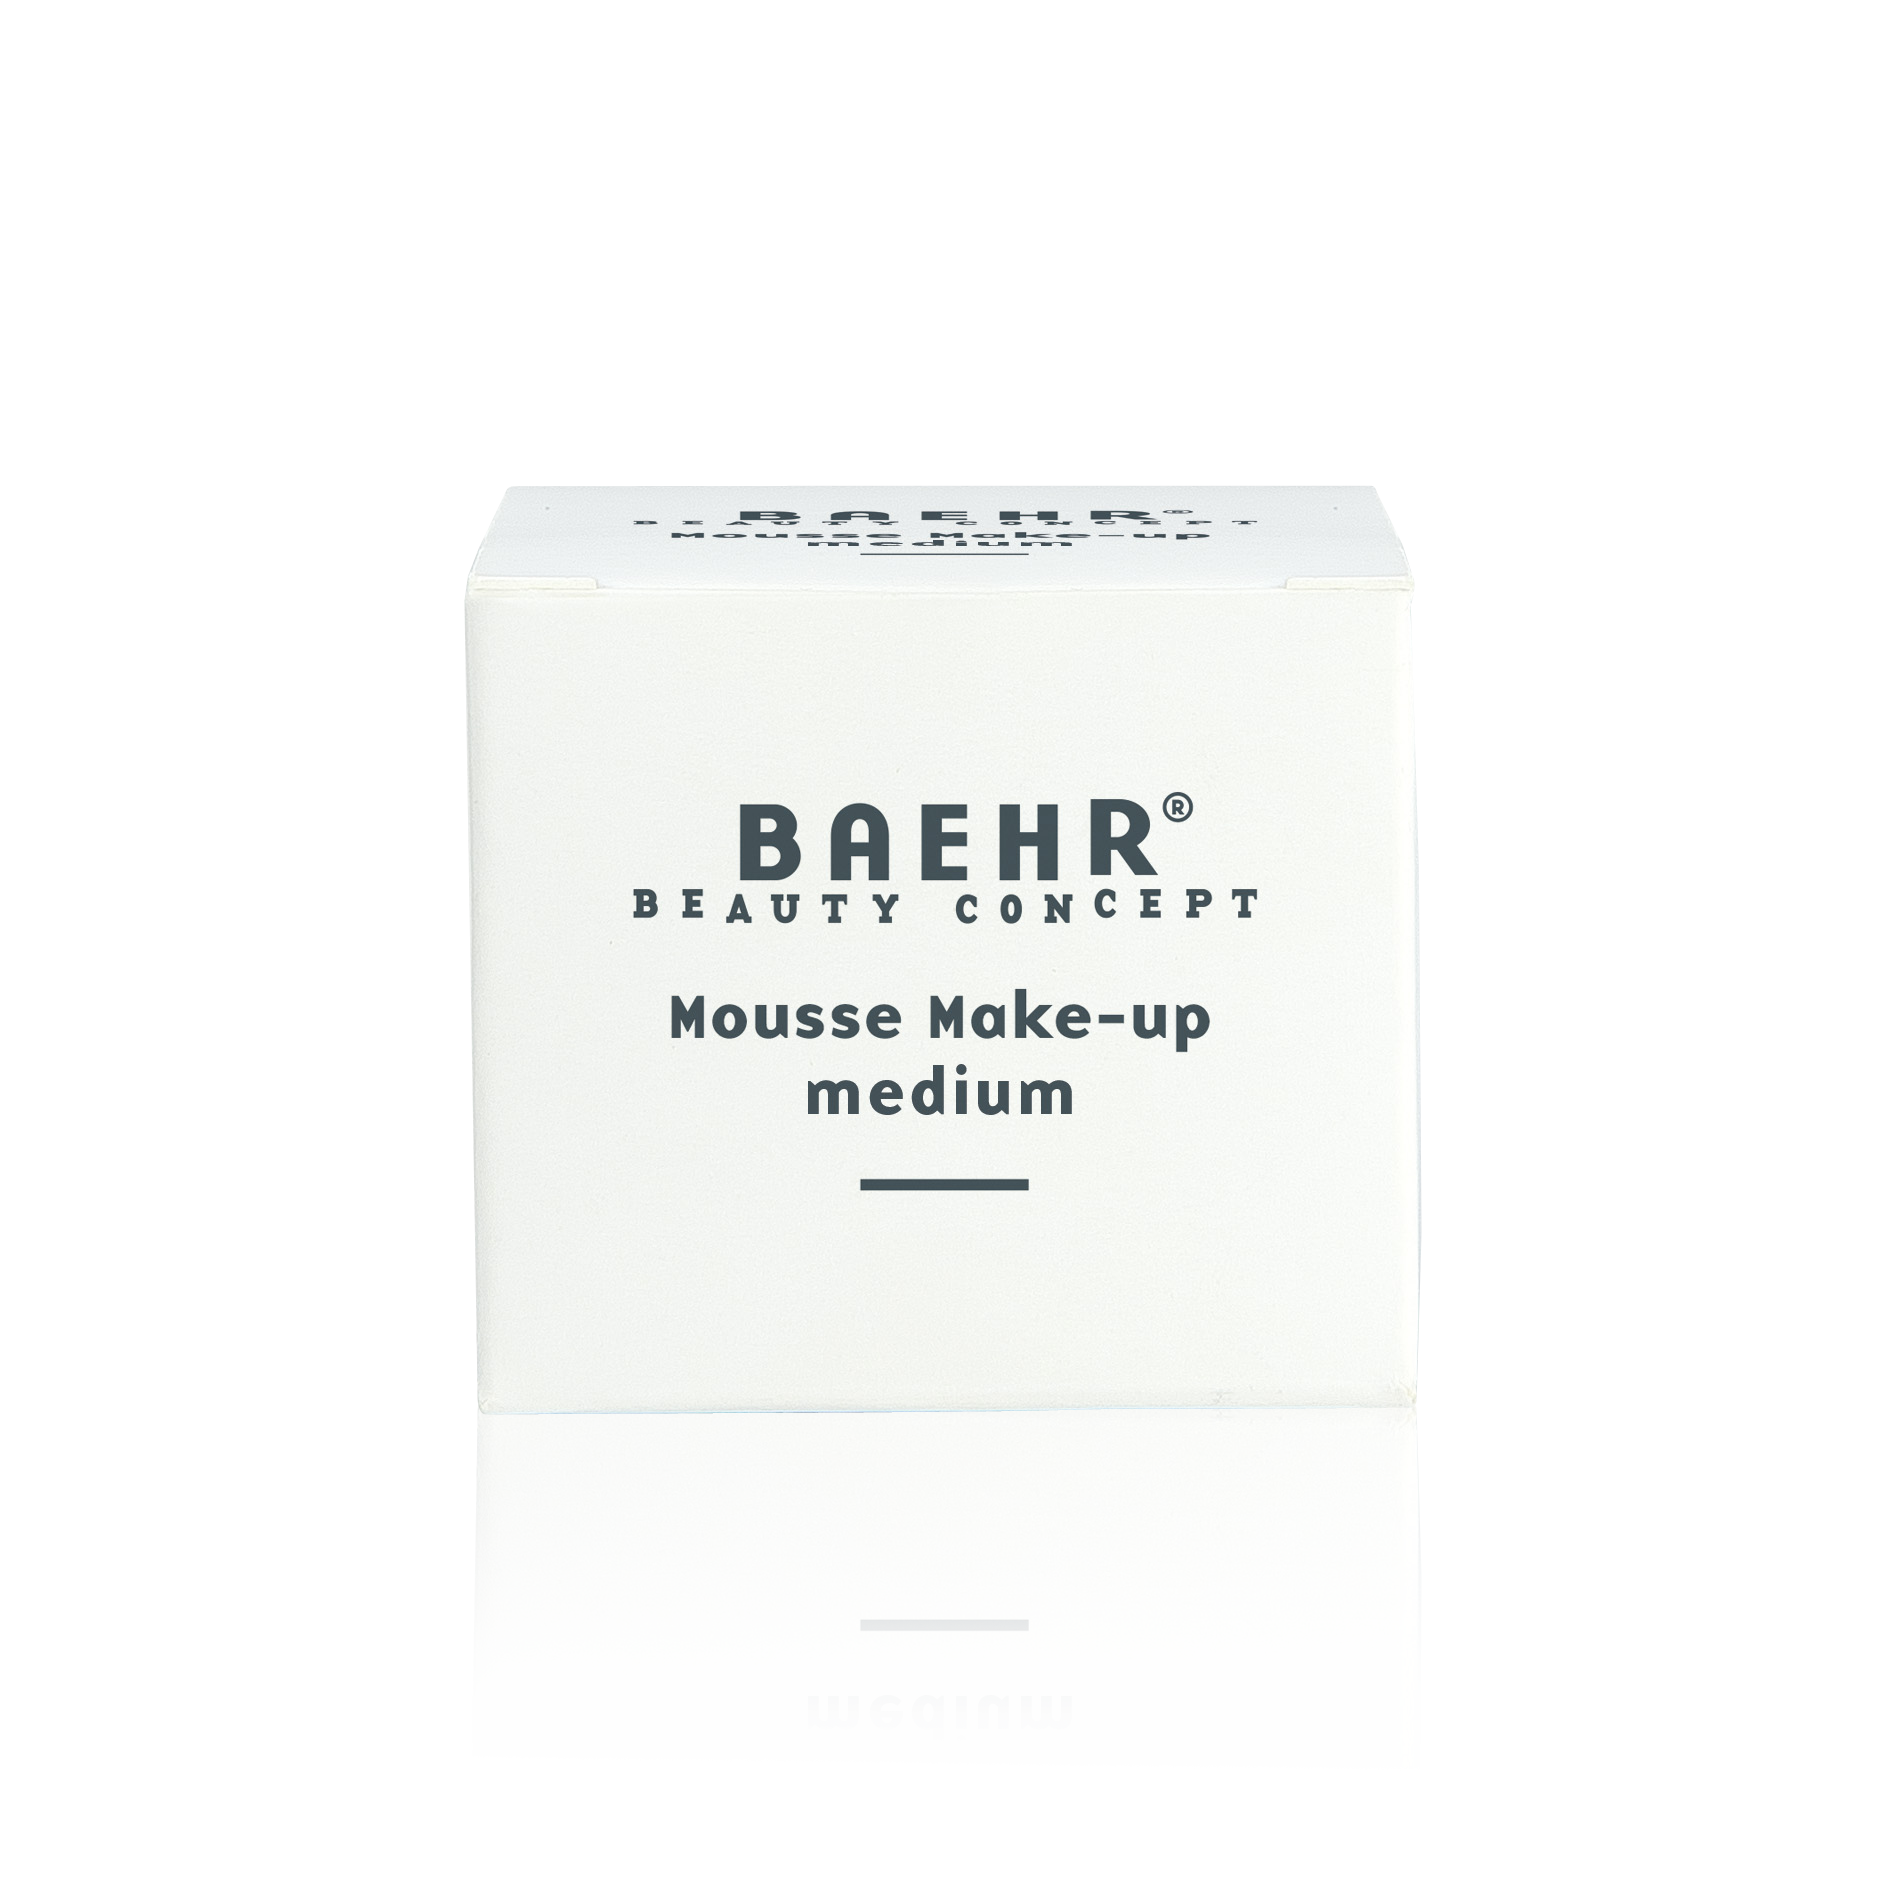 BAEHR BEAUTY CONCEPT Mousse Make-up medium 15 ml